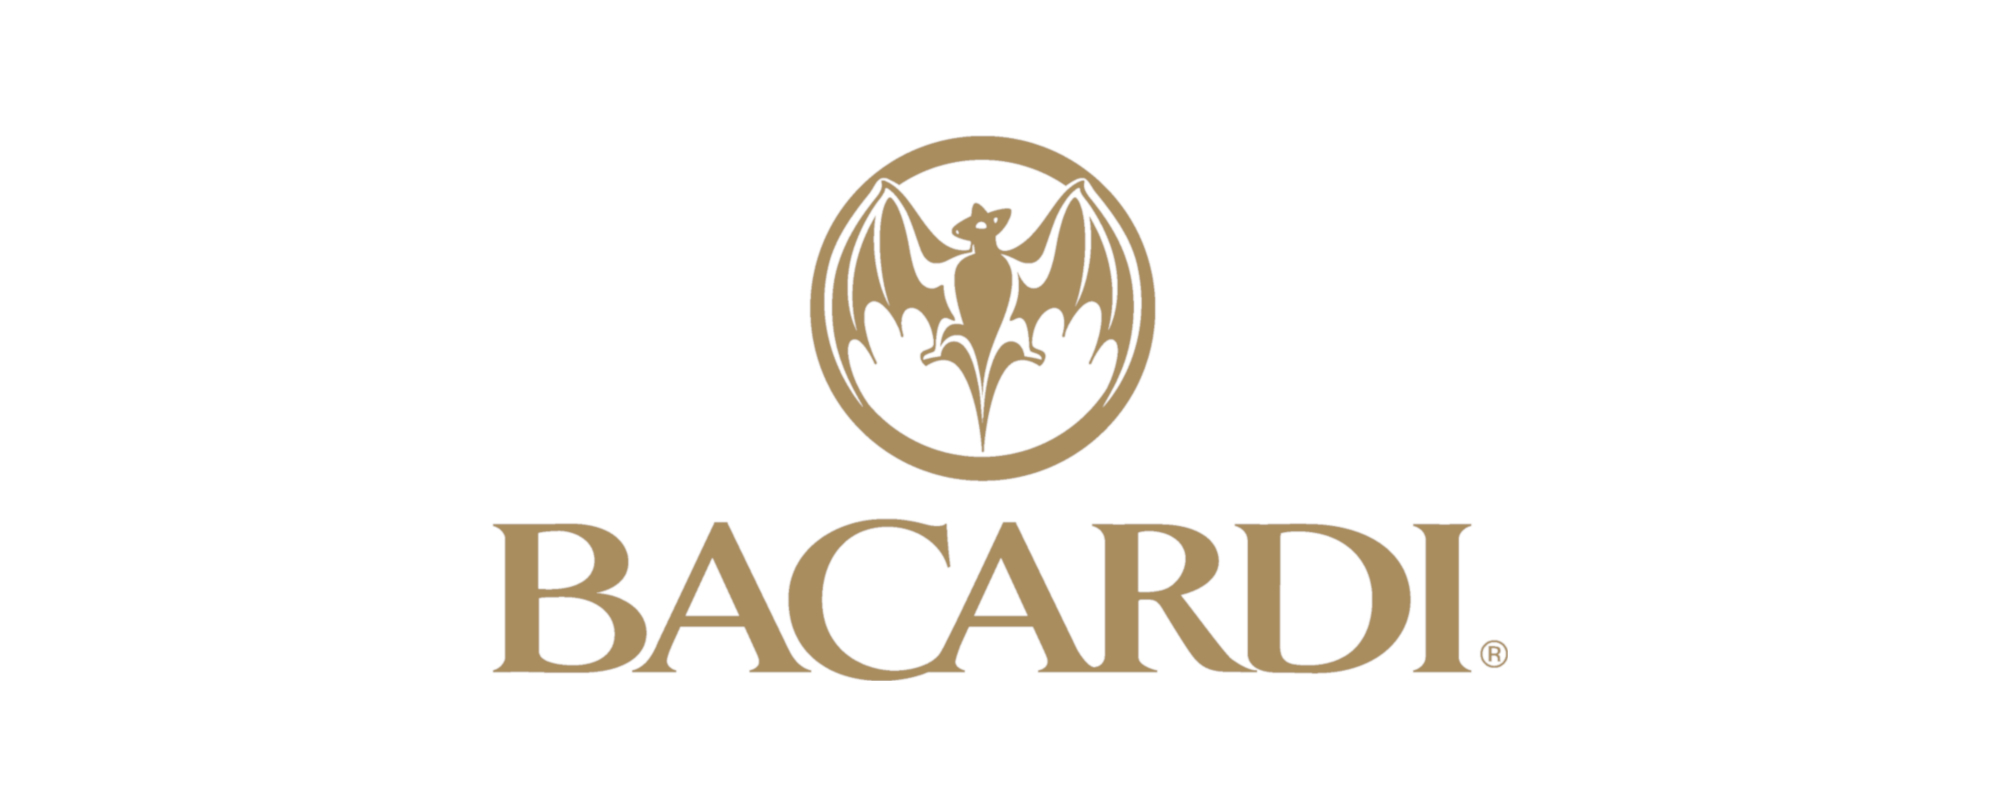 Bacardi Limited